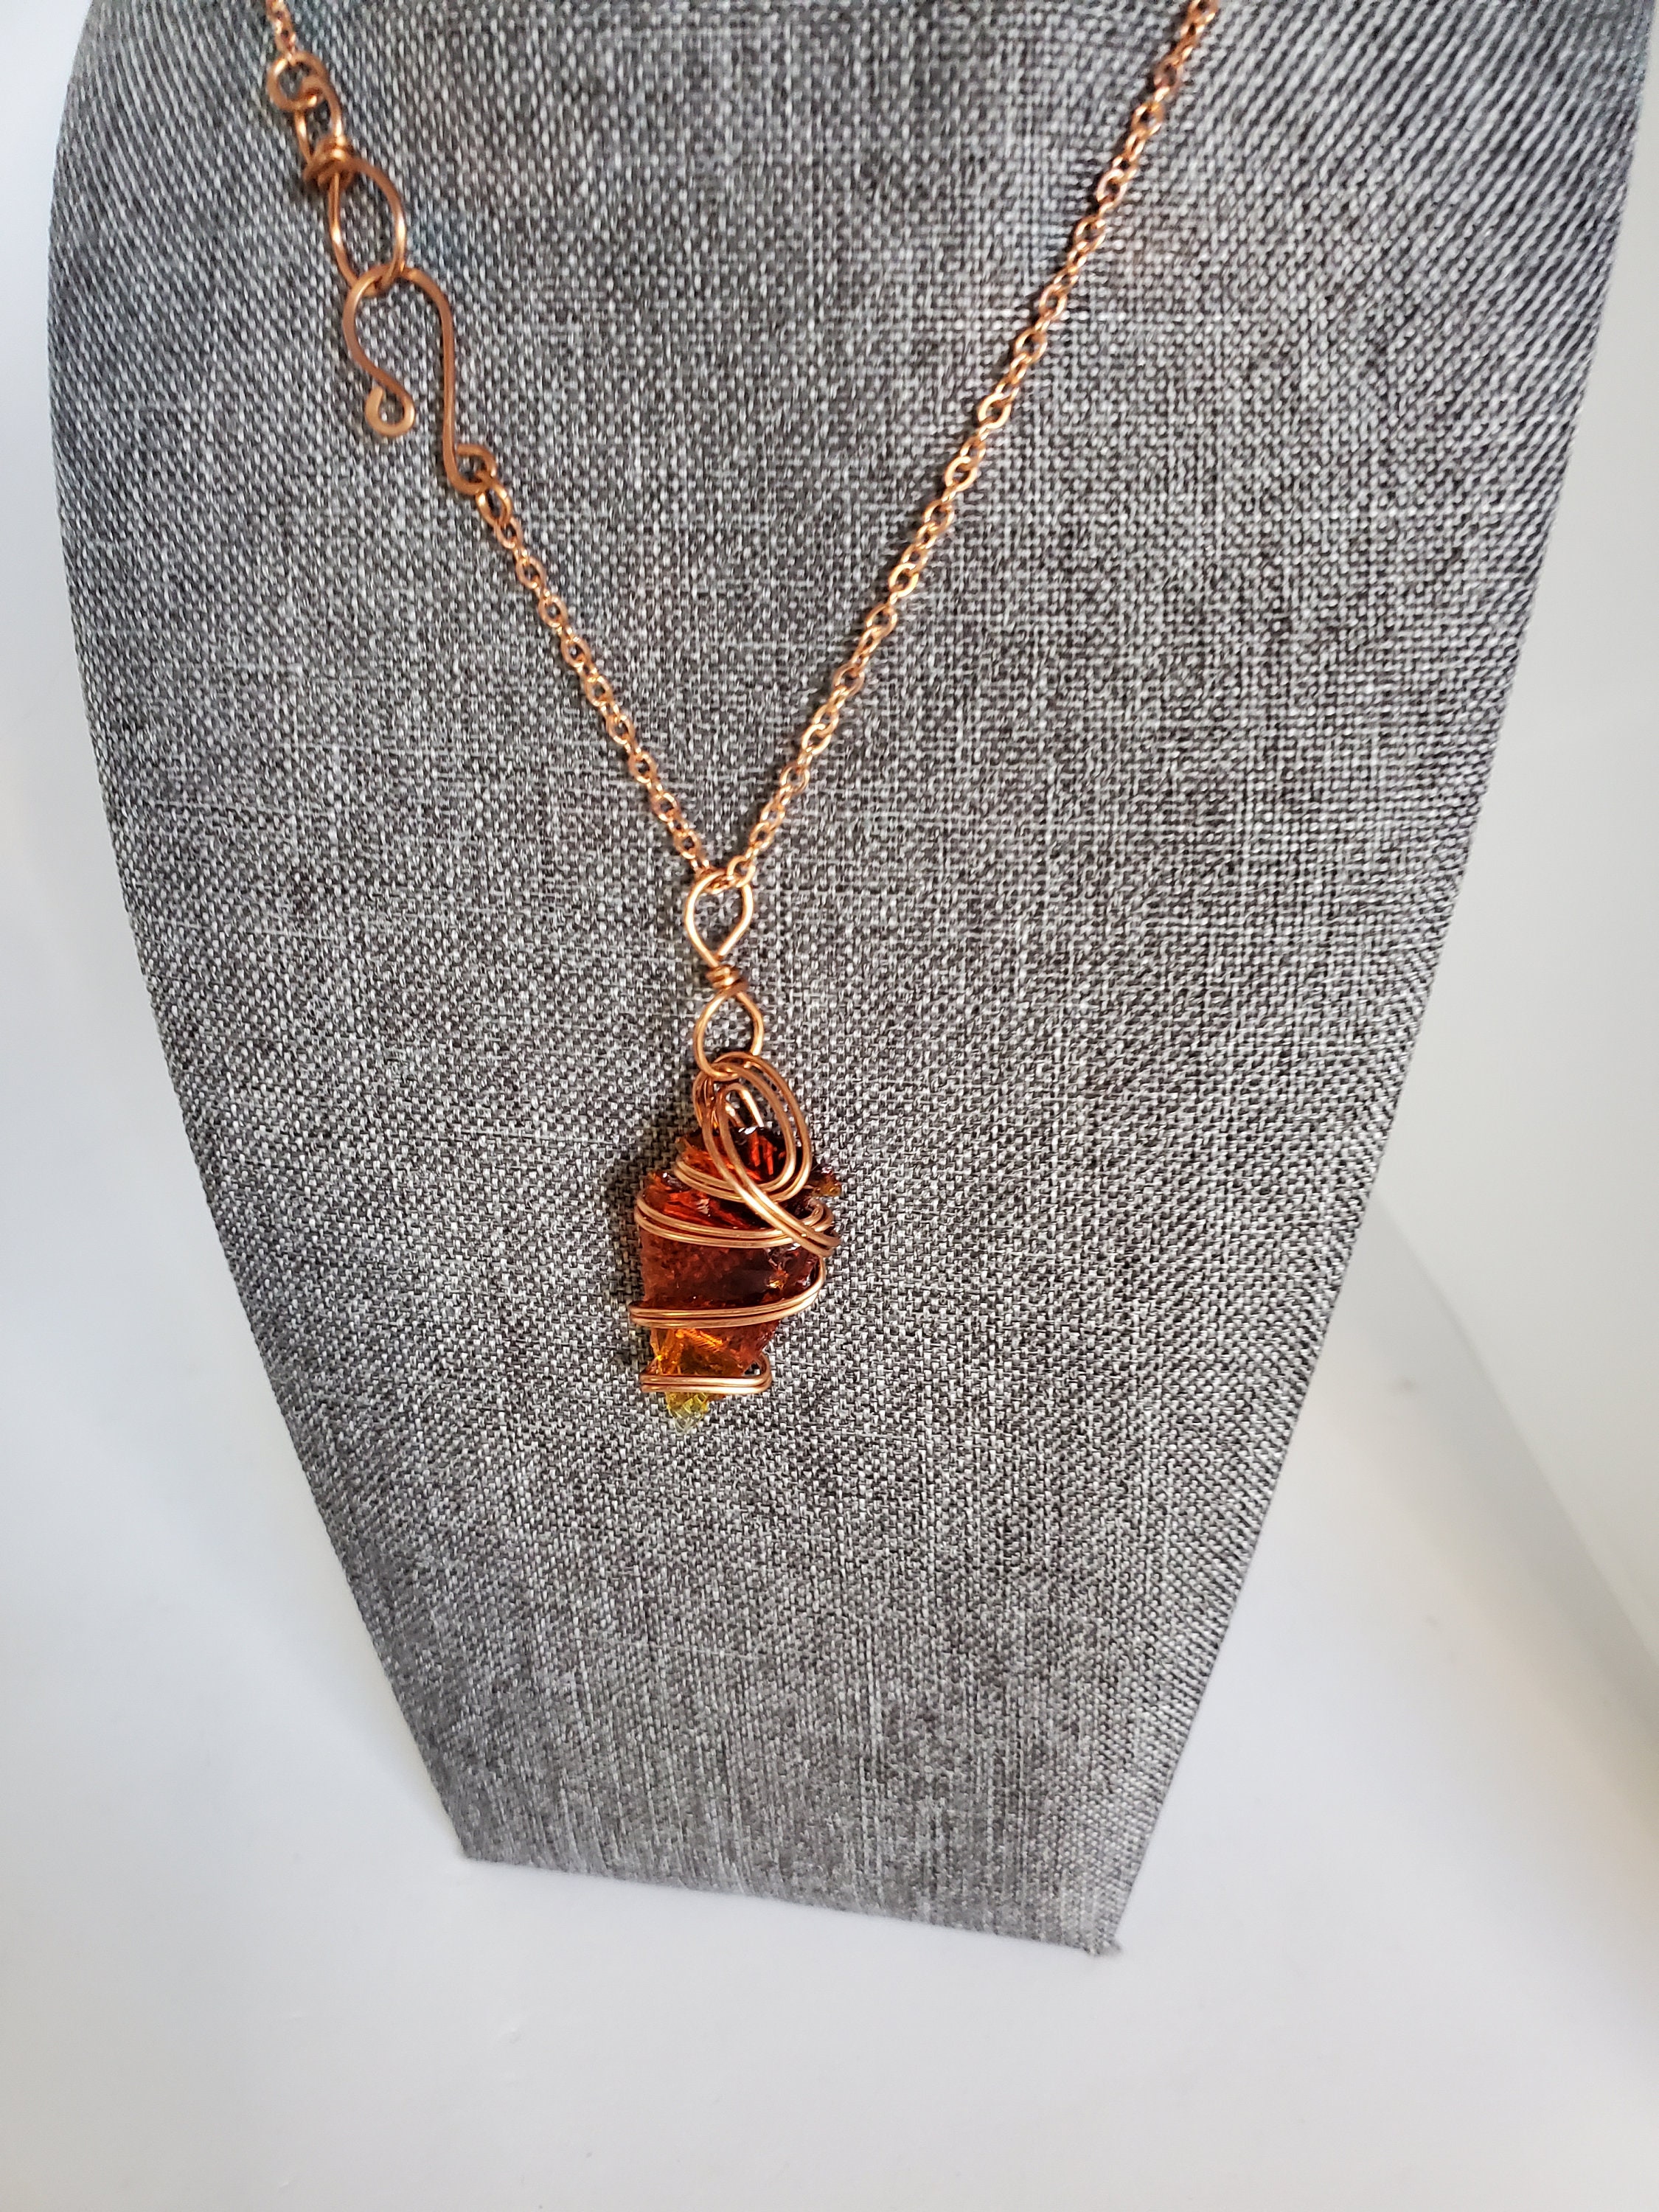 A Copper Wrapped Fire Orange Glass Arrowhead Hippie Jewelry - Etsy